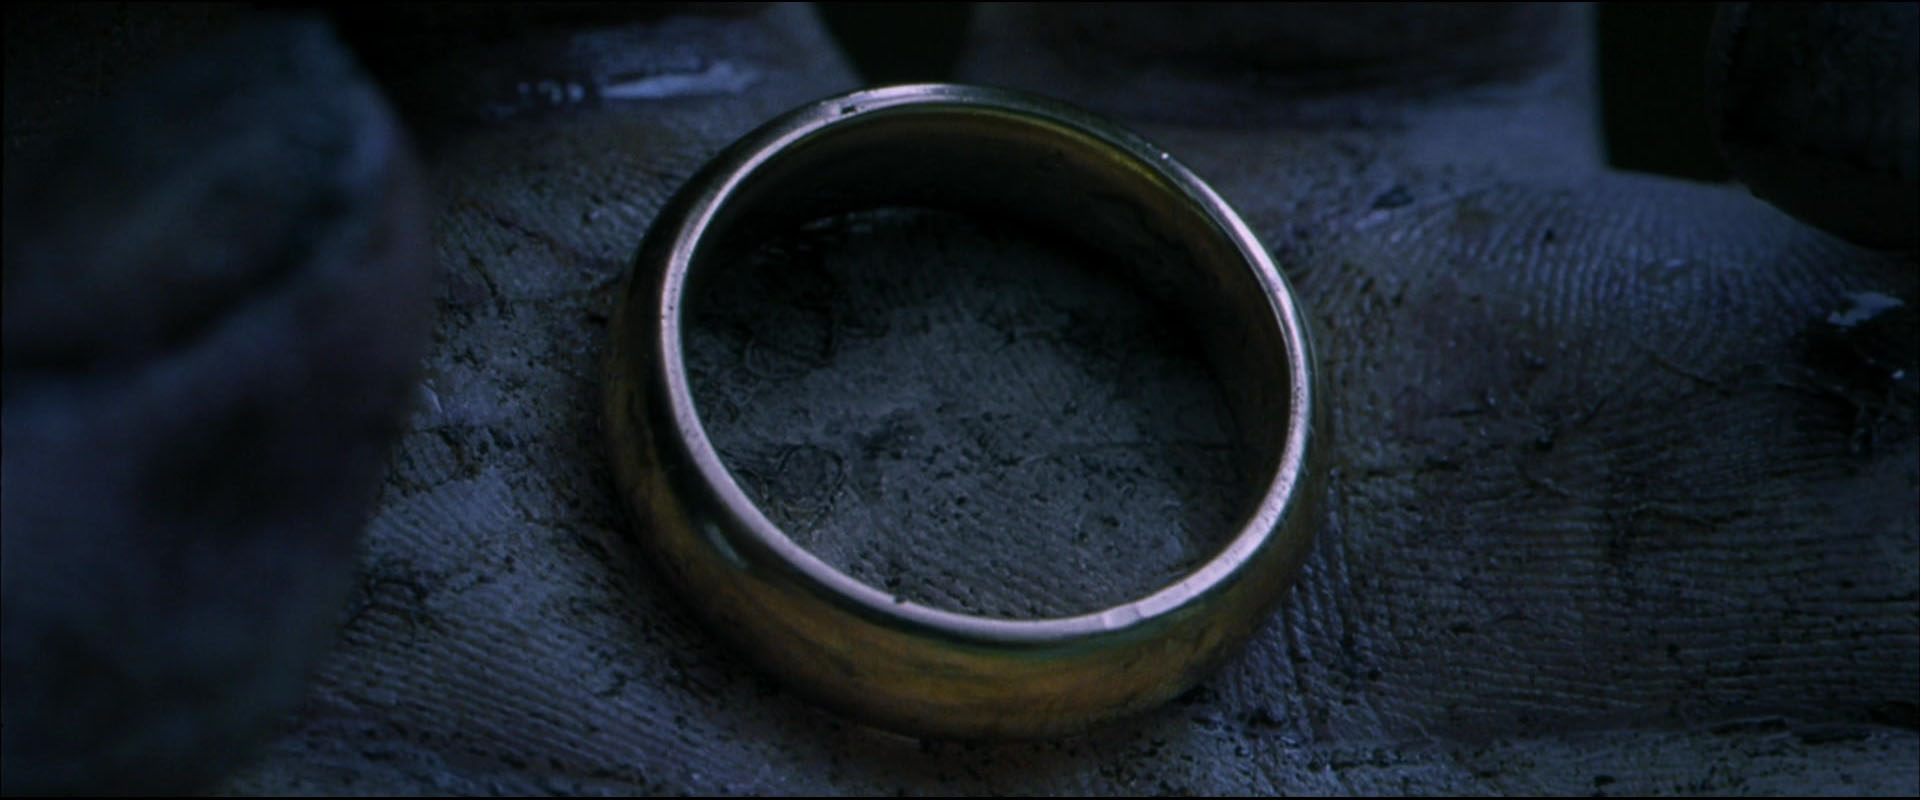 Кольцо с фильма властелин колец